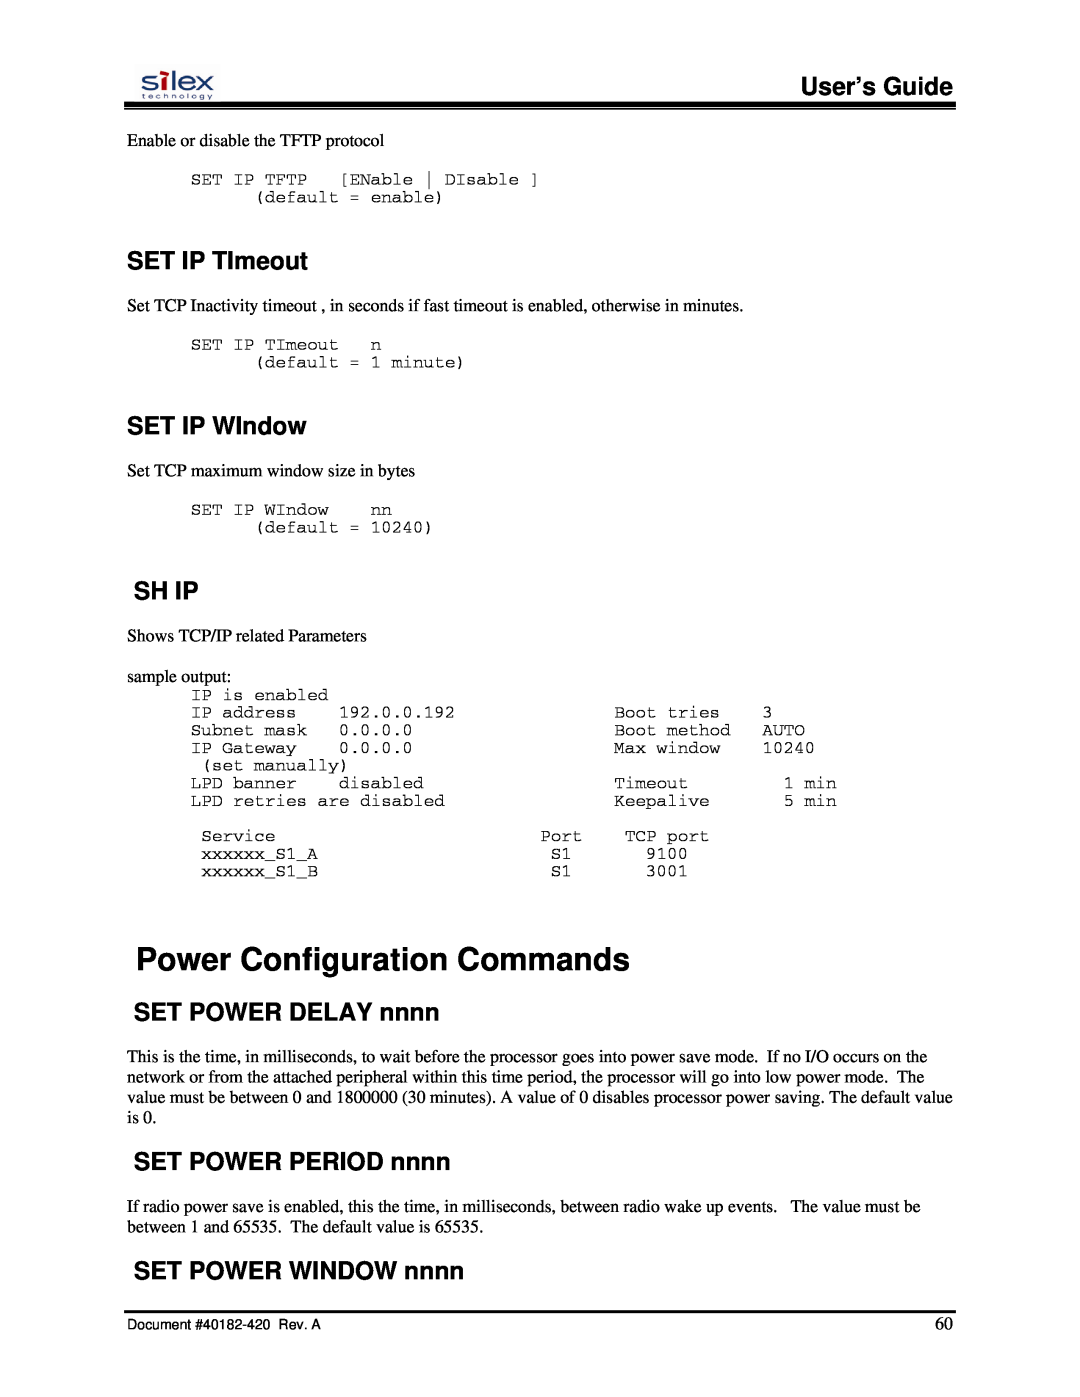 Silex technology SX-200 Power Configuration Commands, SET IP TImeout, SET IP WIndow, Sh Ip, SET POWER DELAY nnnn 